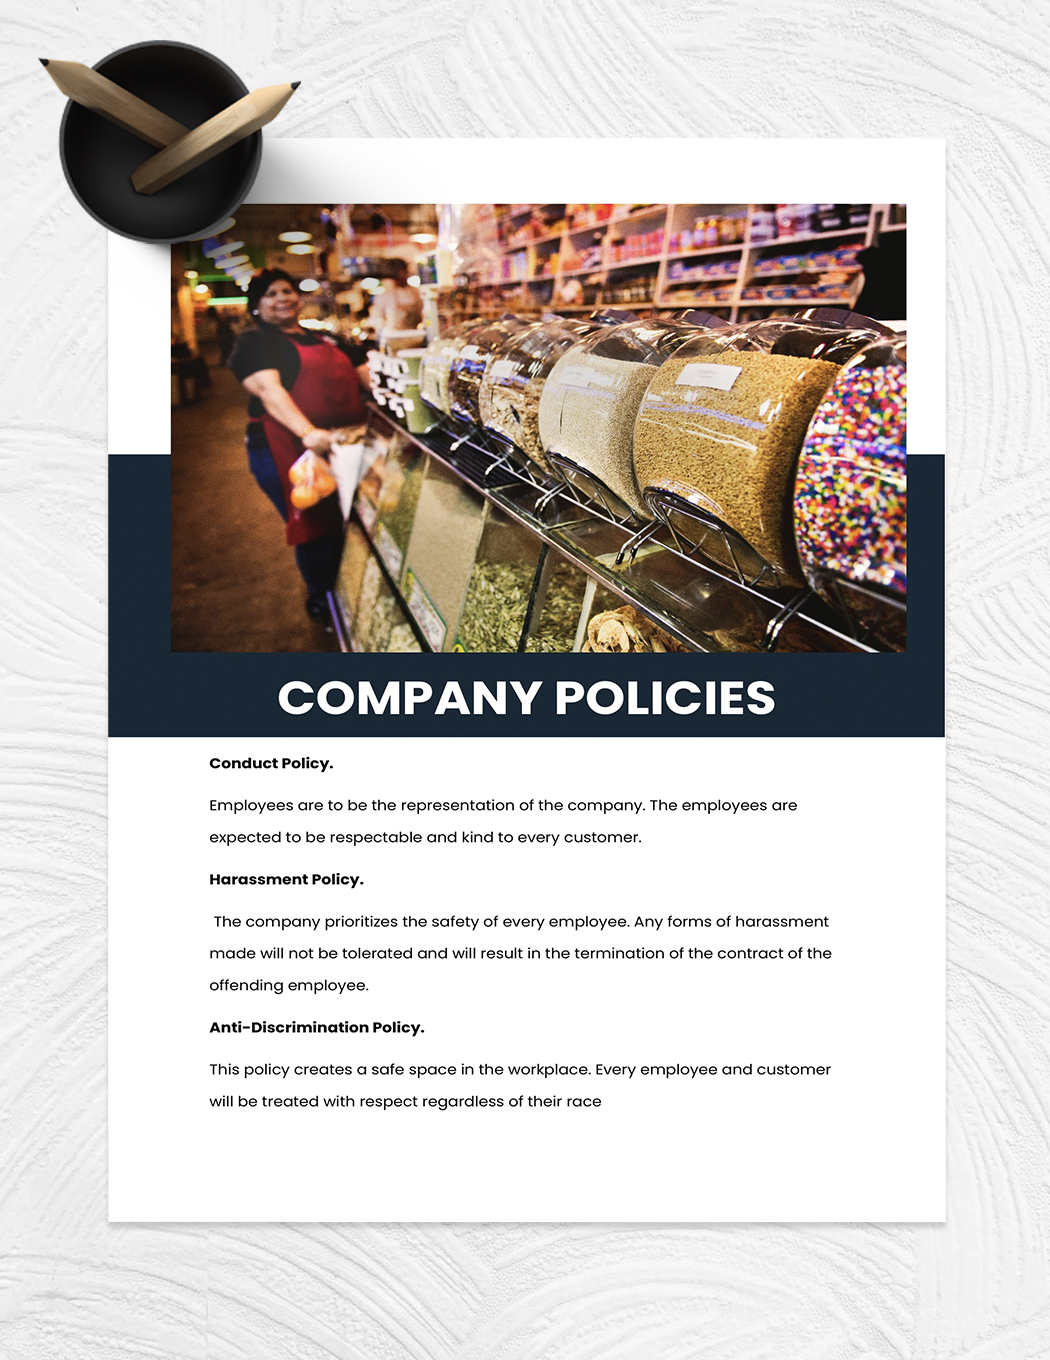 Retail Employee Handbook Template